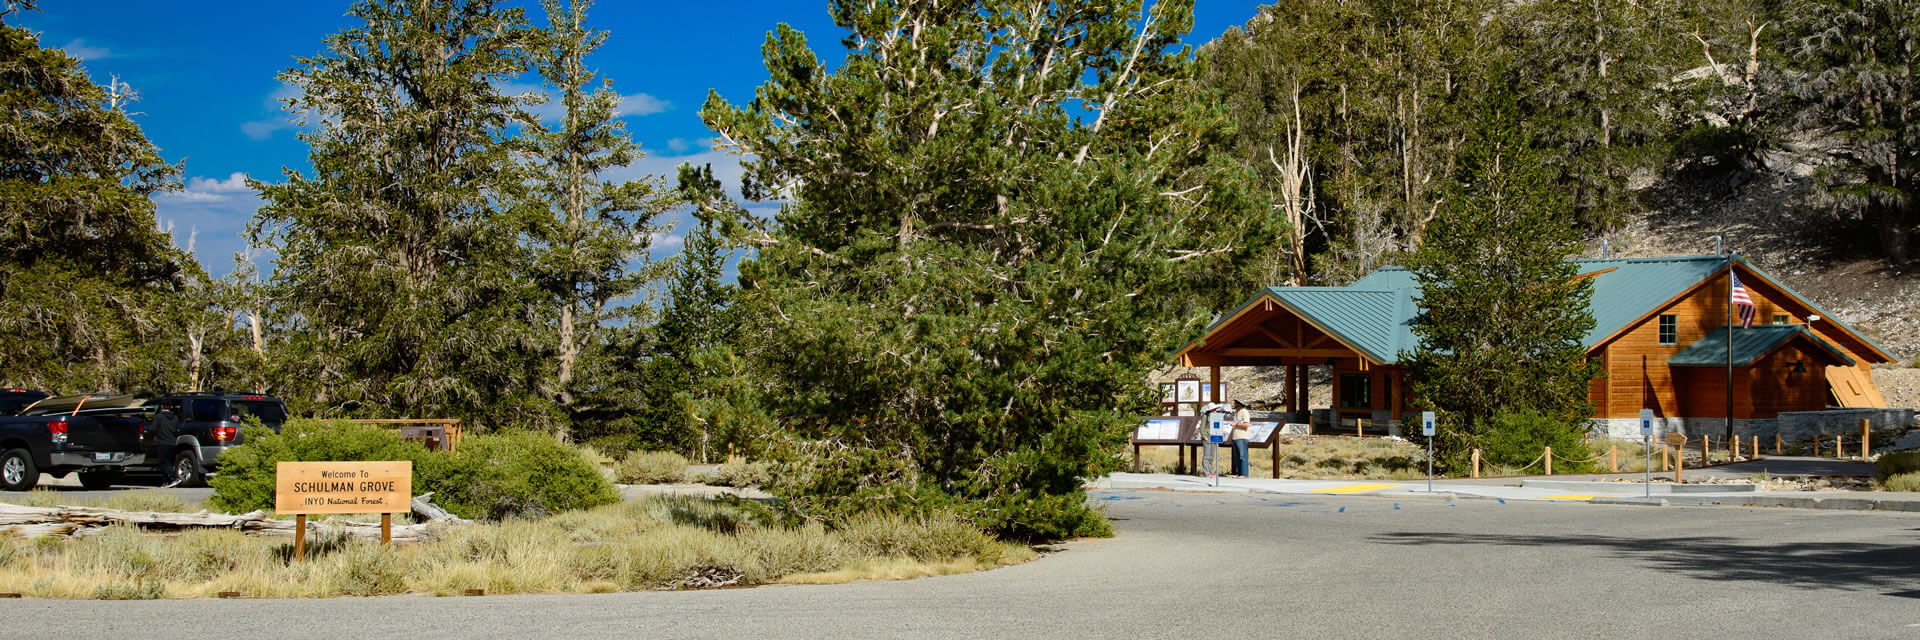 Bristlecone pine at the Brisetlecone Pine Visitor Center